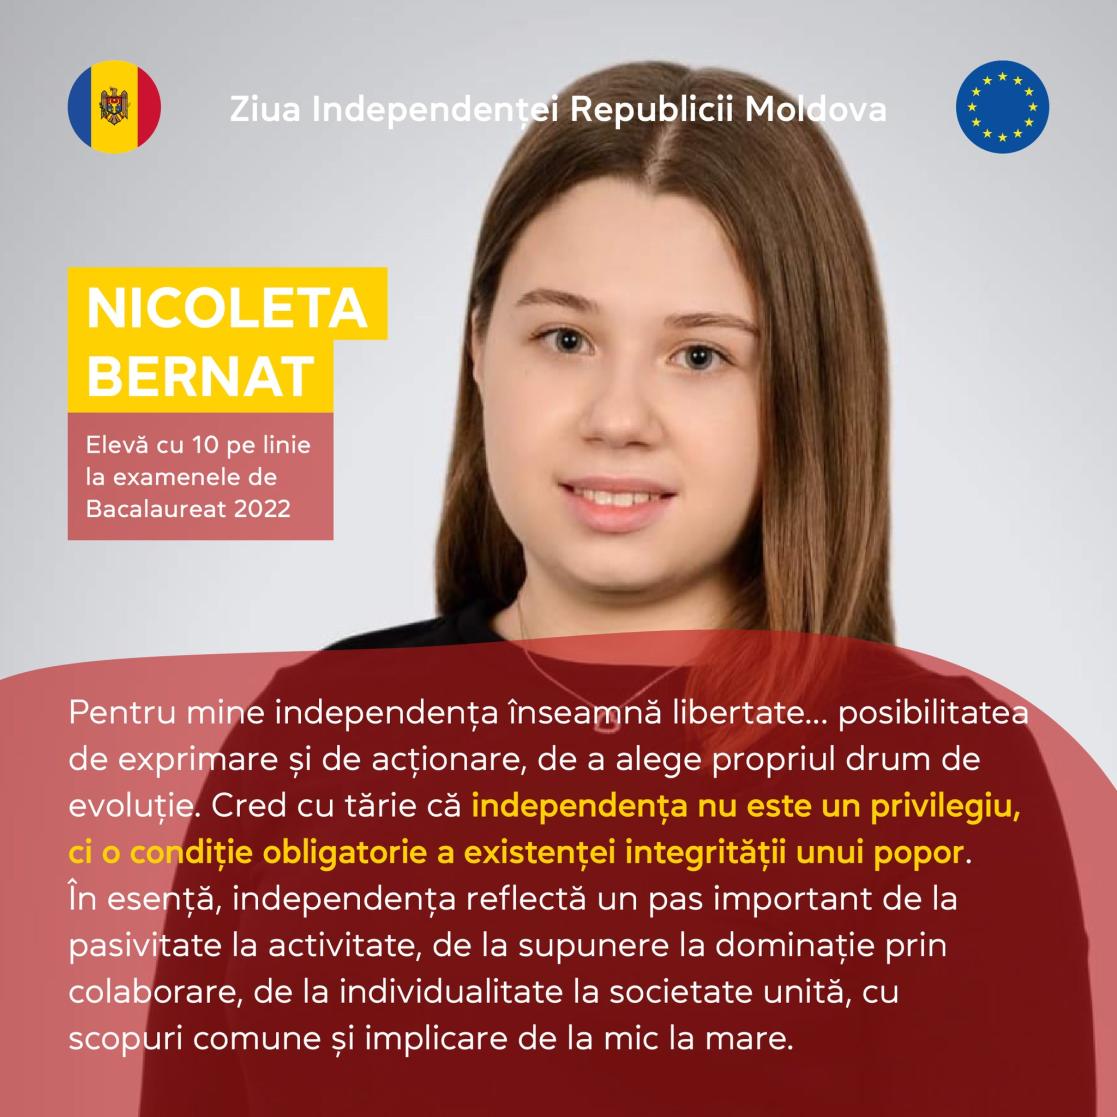 Declaration by a person named Nicoleta Bernat